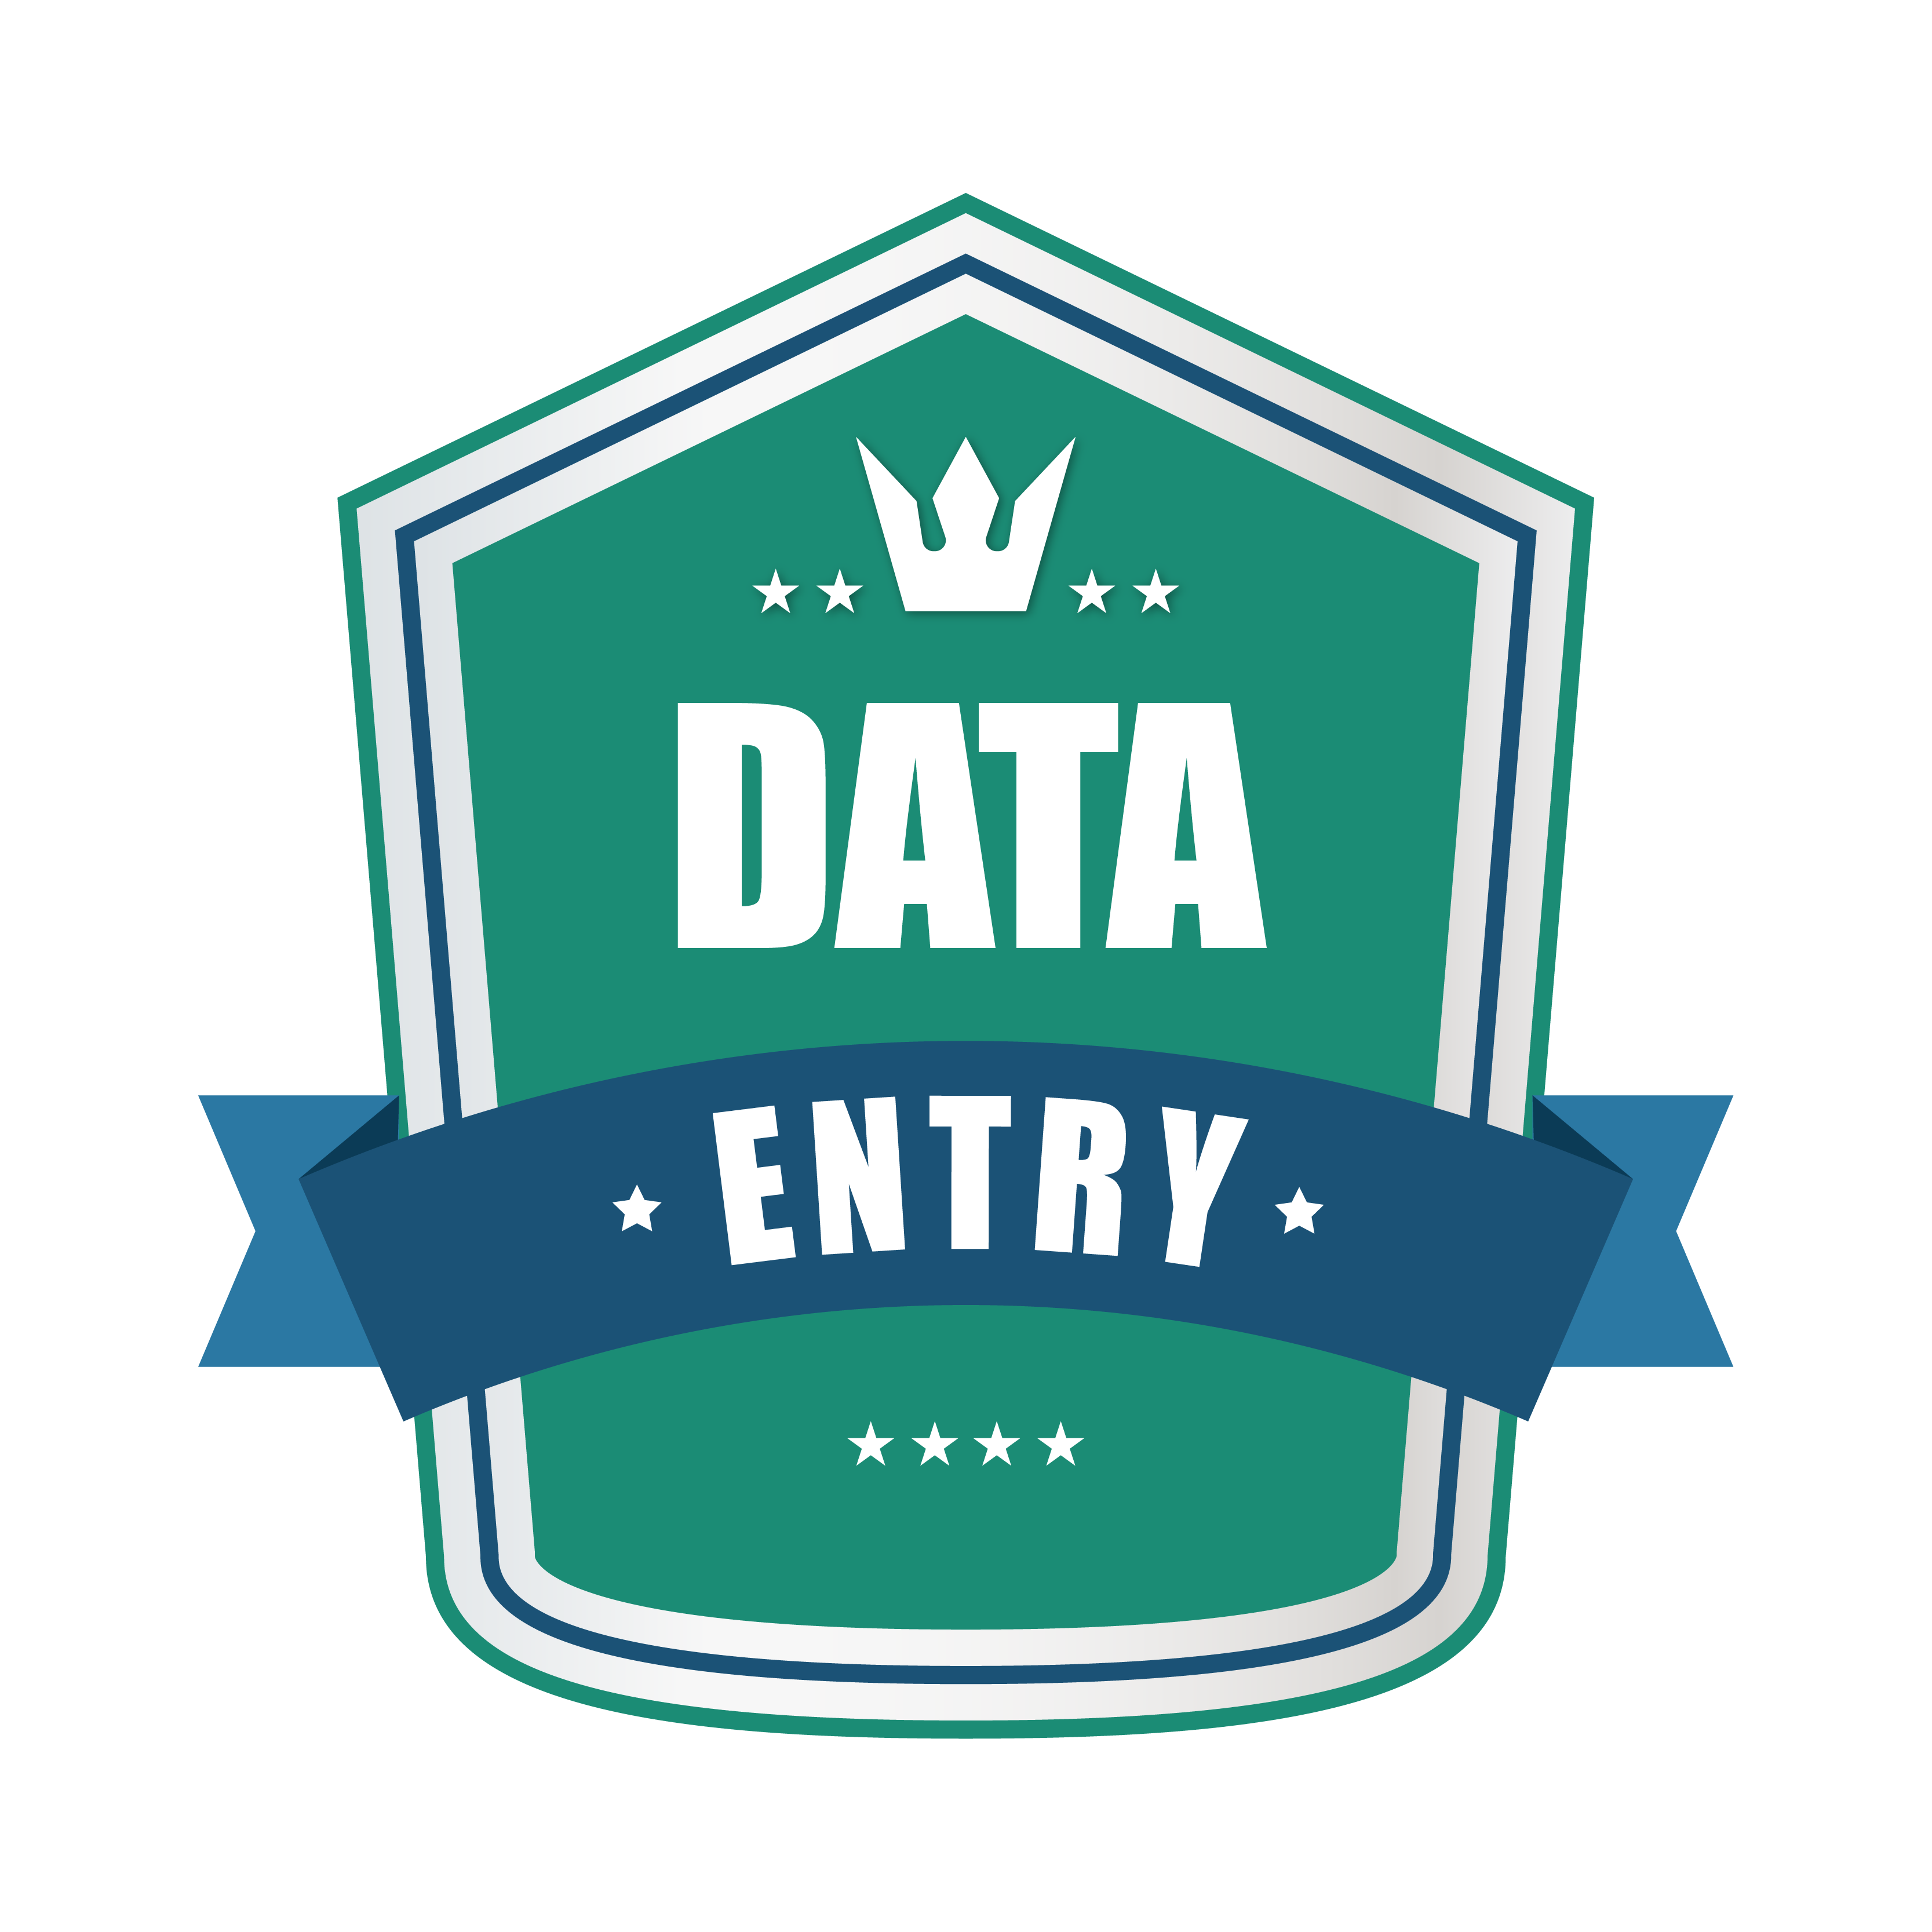 Data entry badge